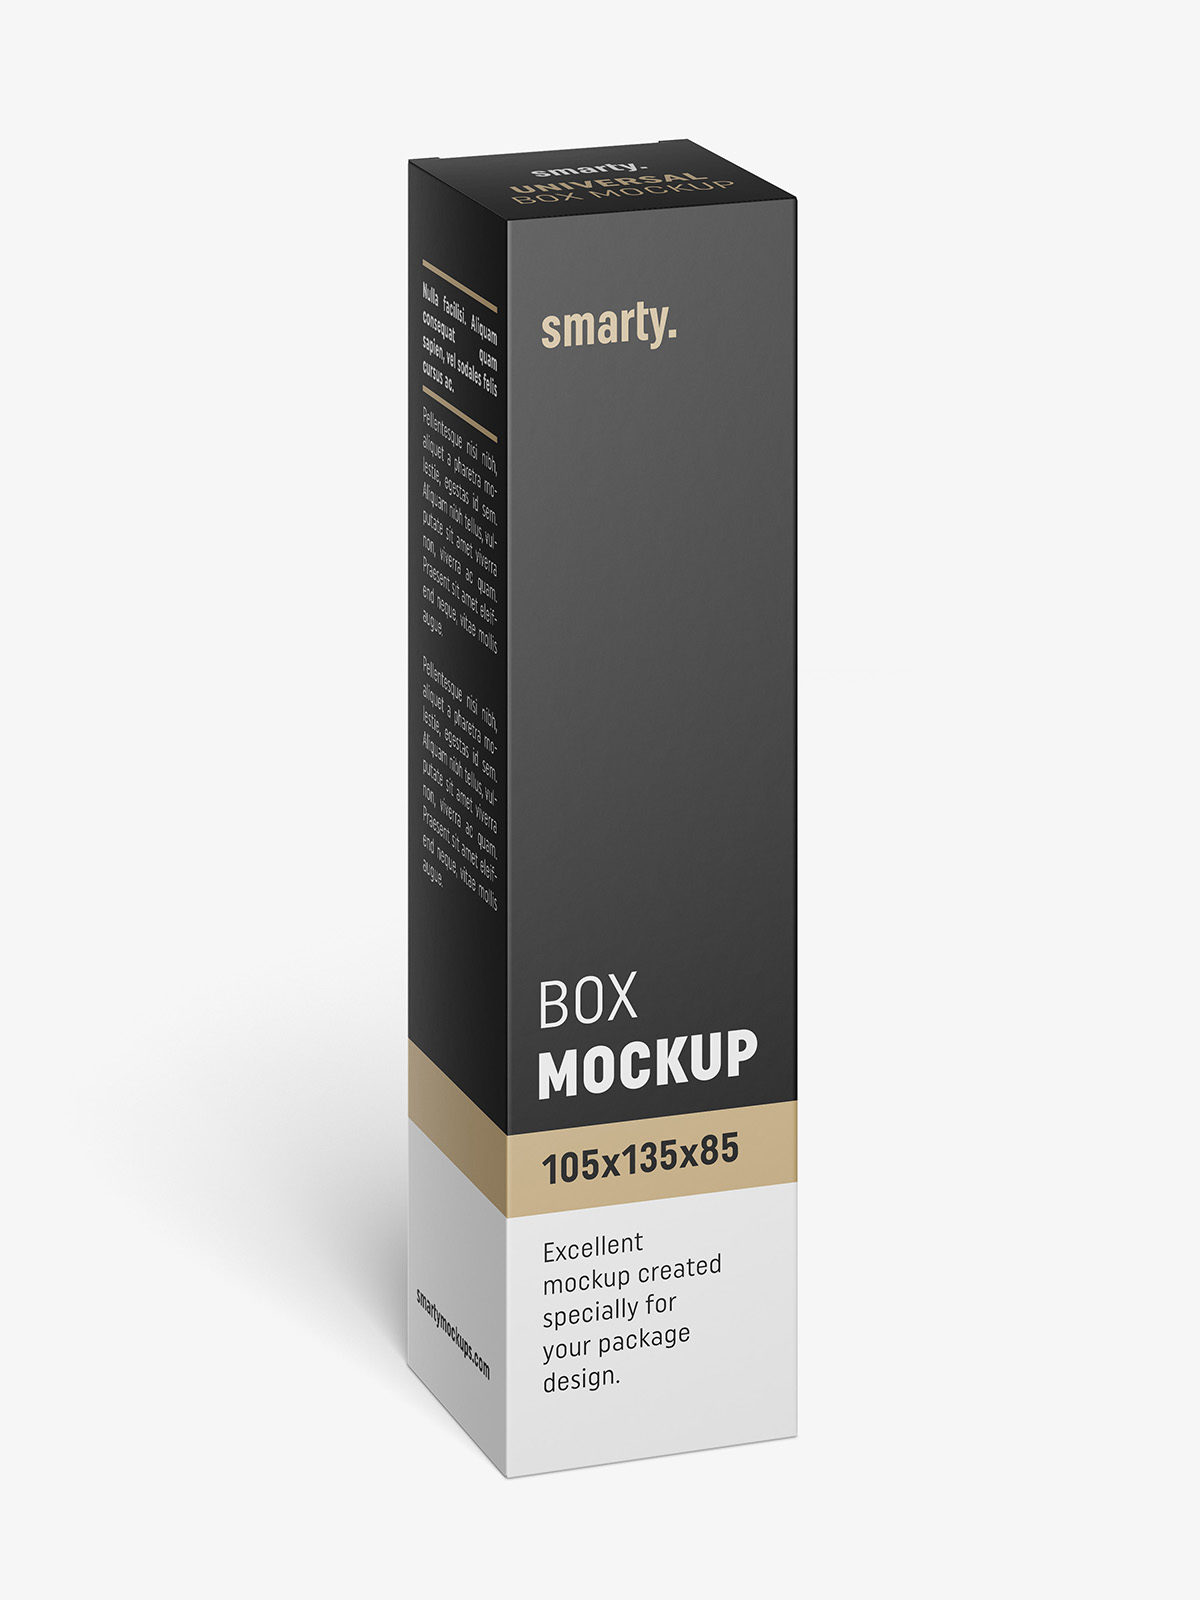 Download Box mockup / 45x180x45 - Smarty Mockups